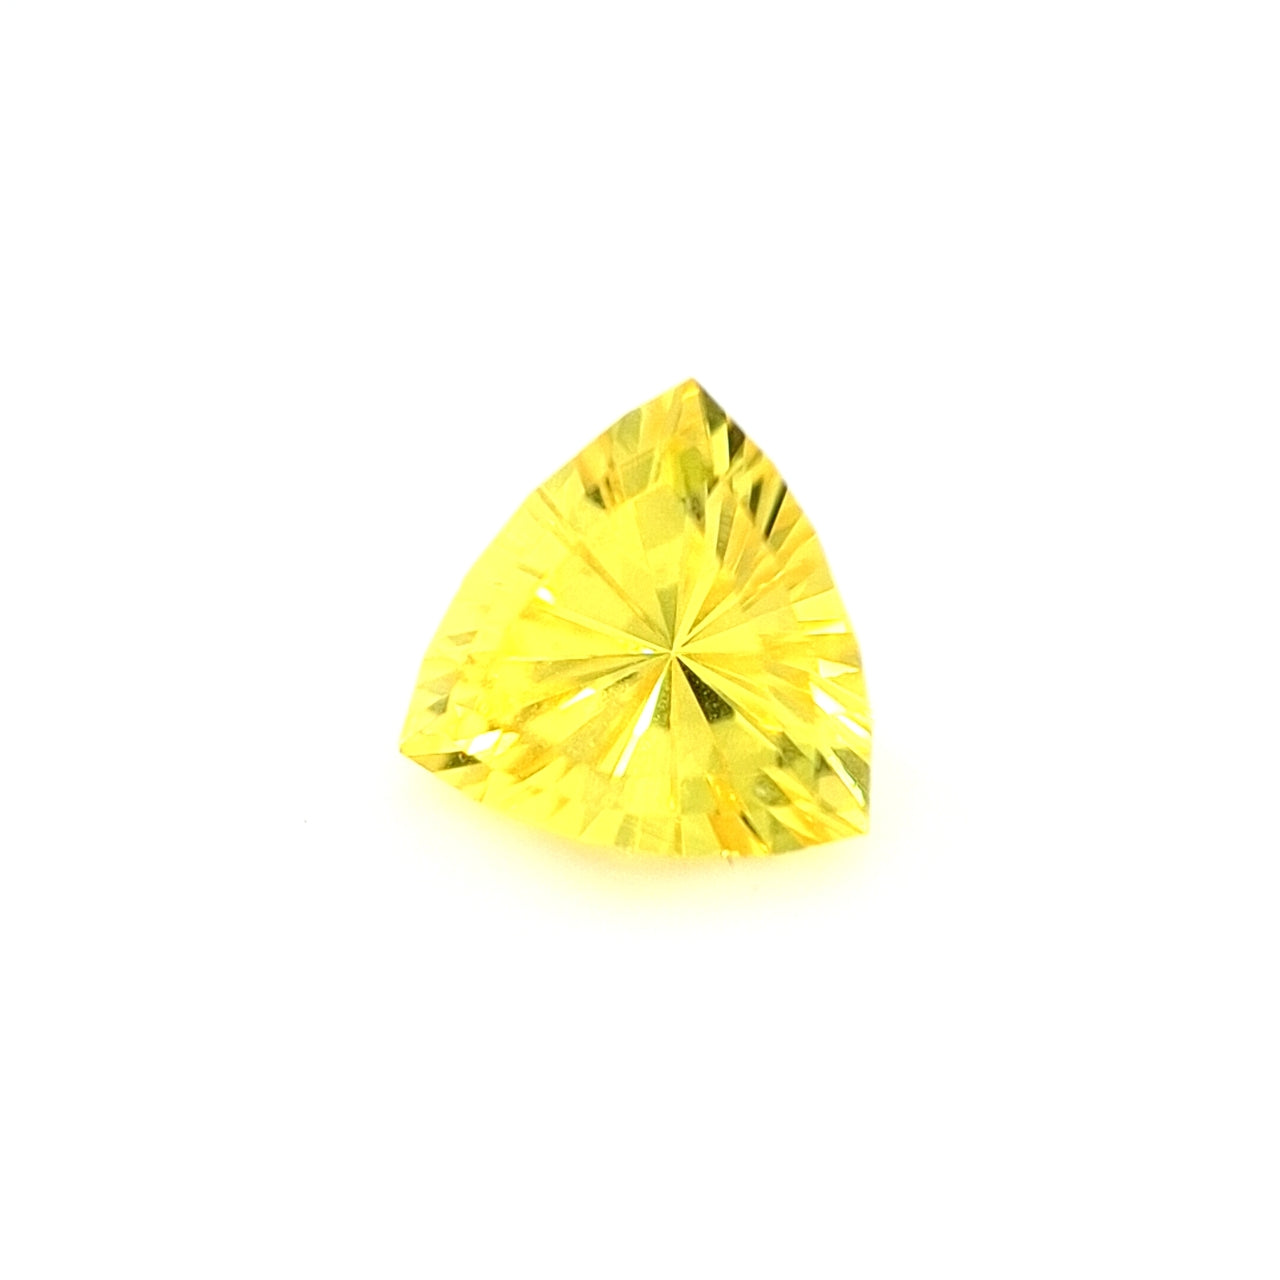 1.18ct Australian Sapphire, Intense Yellow - Trillion cut